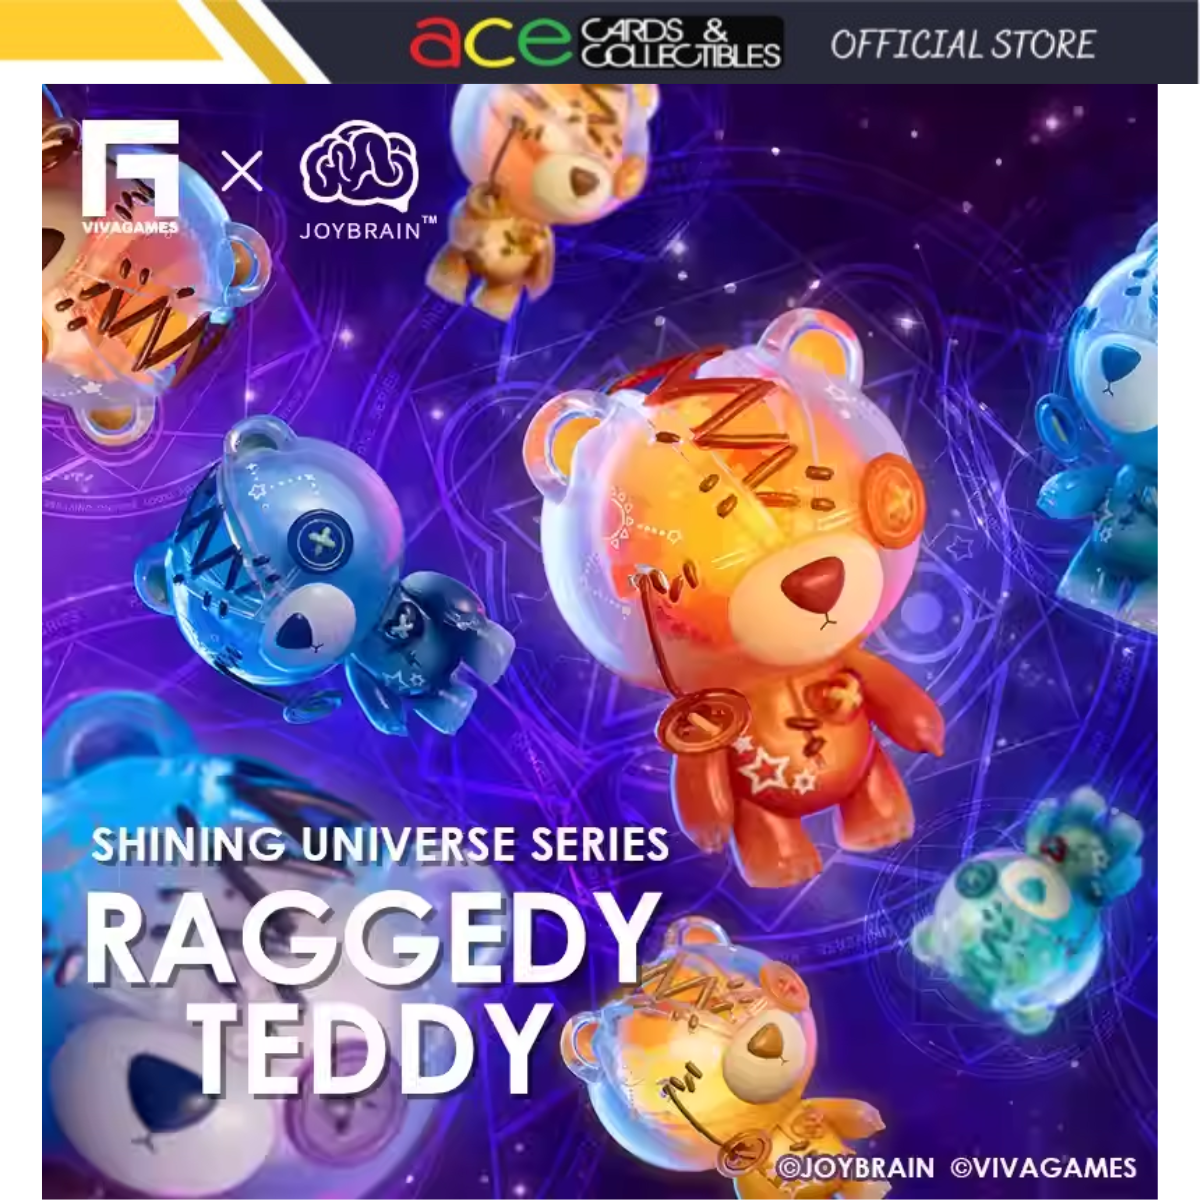 Raggedy Teddy Shining Universe Series-Single Box (Random)-JoyBrain-Ace Cards & Collectibles